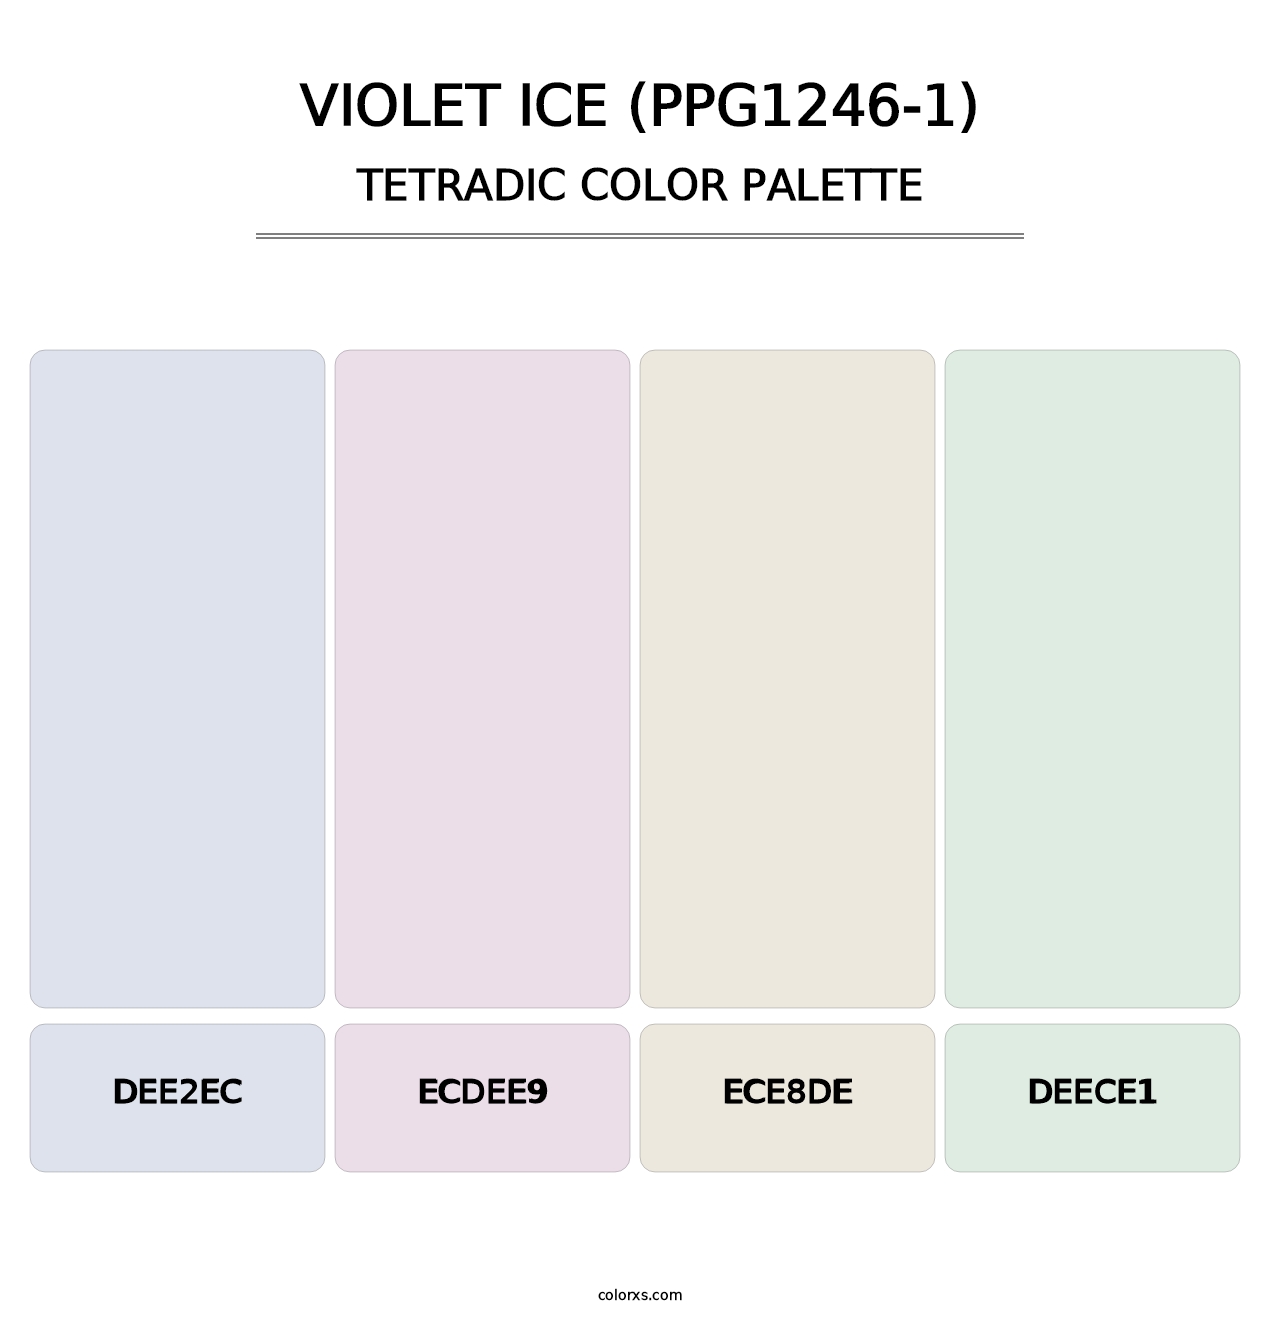 Violet Ice (PPG1246-1) - Tetradic Color Palette